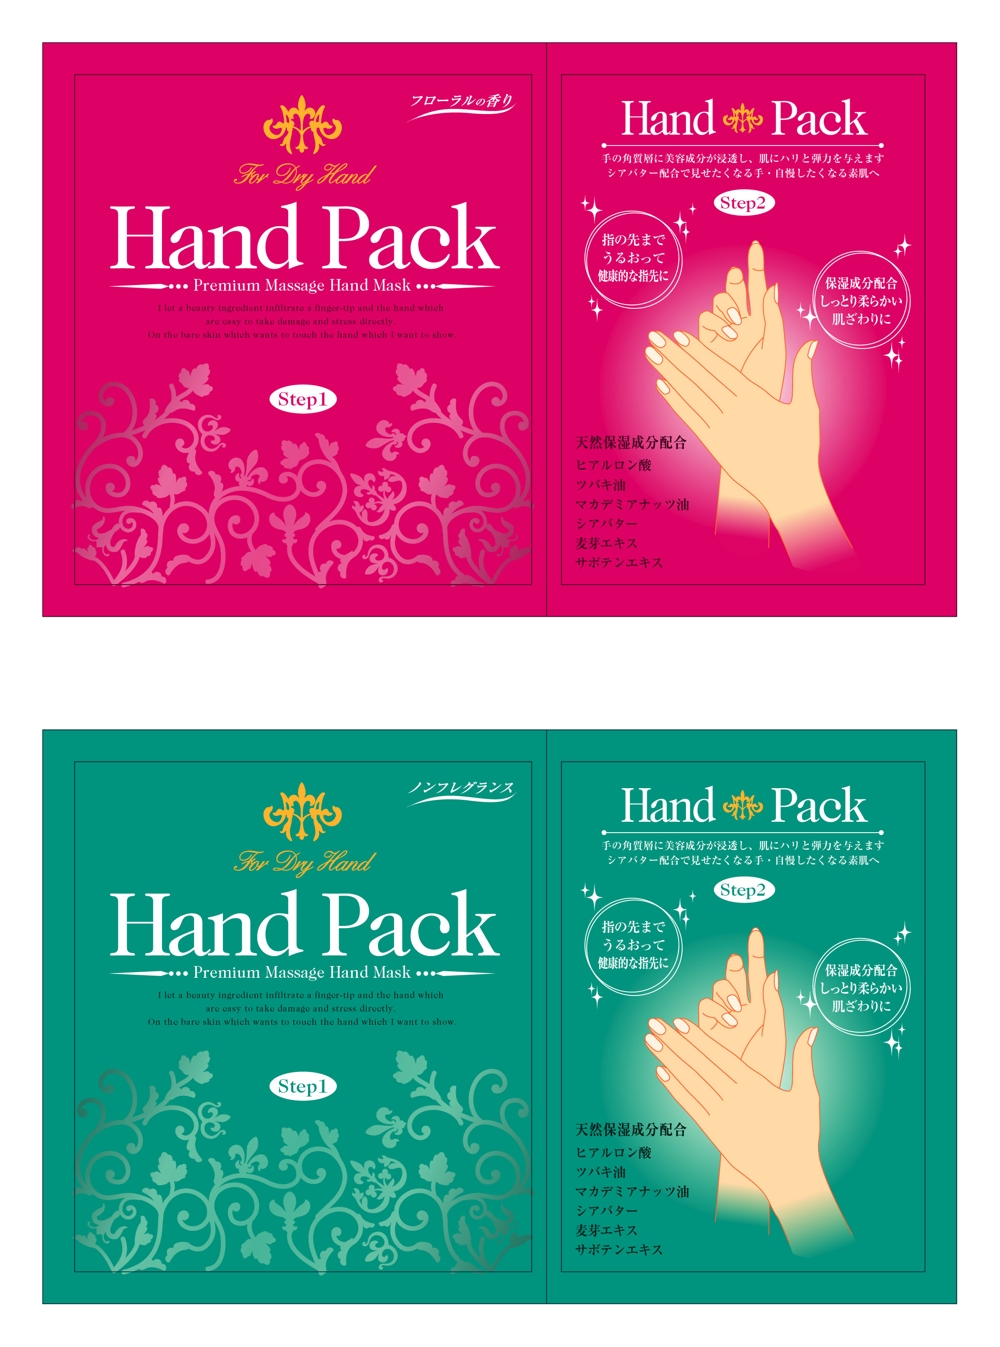 HandPack.jpg